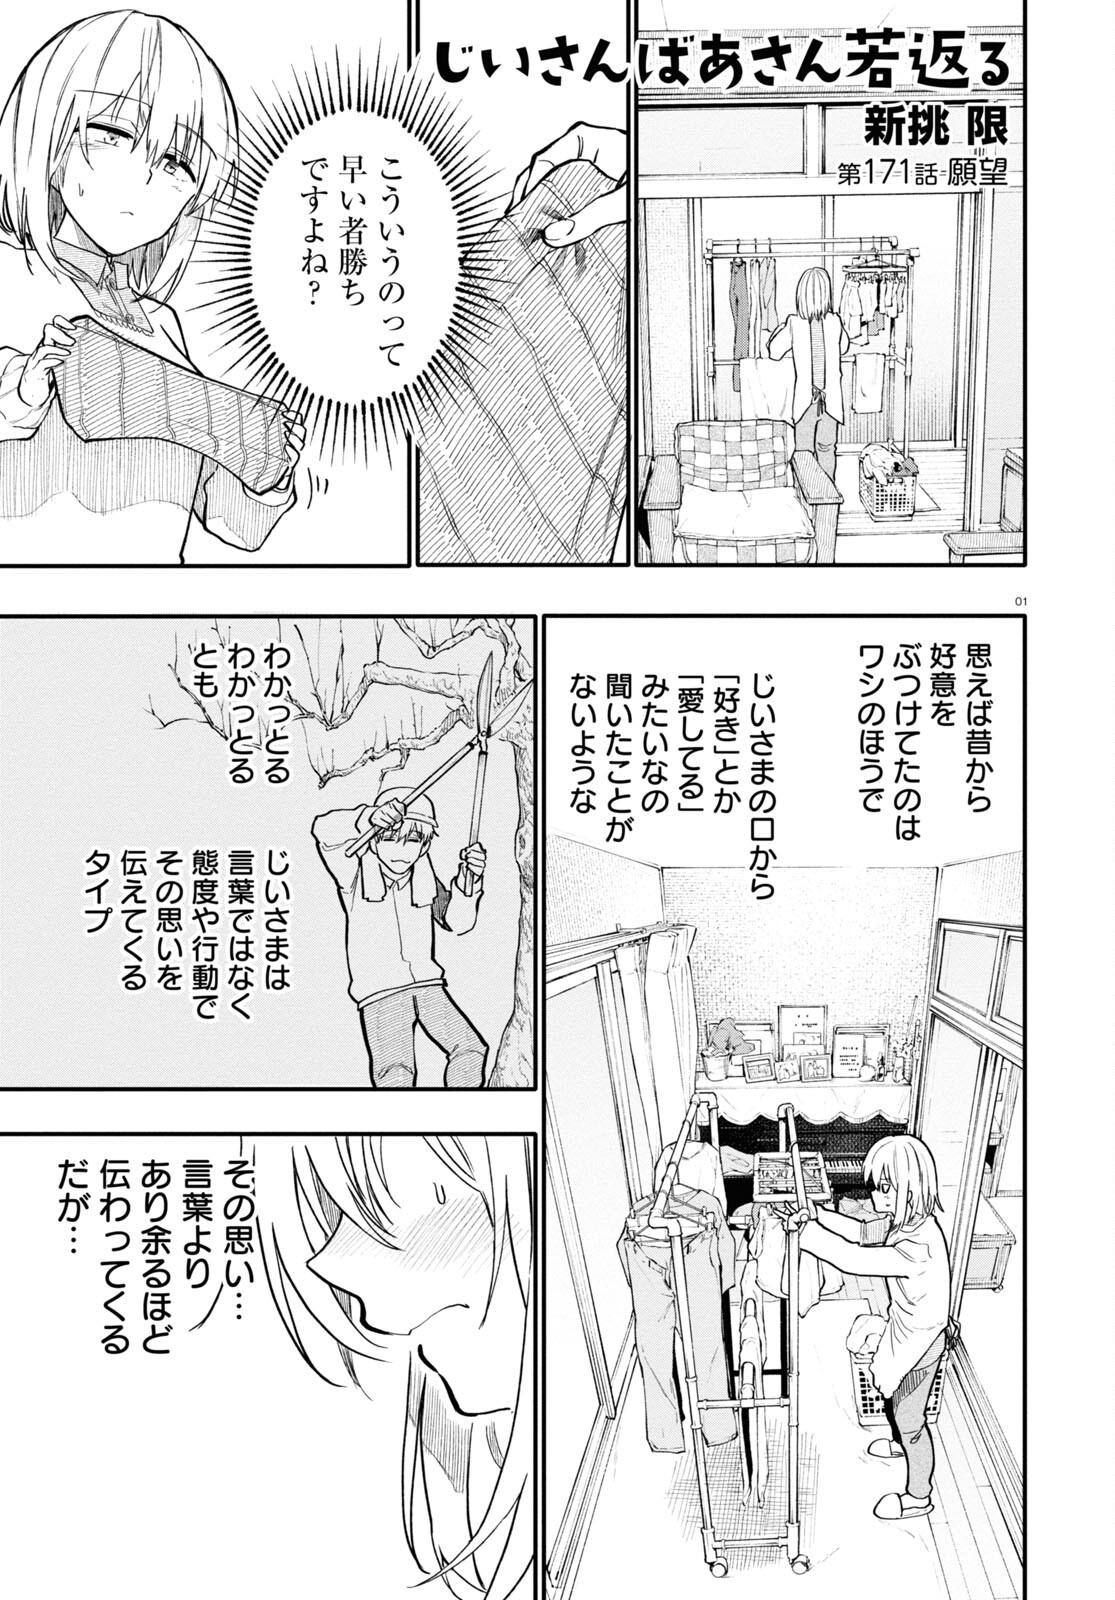 Ojii-san to Obaa-san ga Wakigaetta Hanashi - Chapter 171 - Page 1